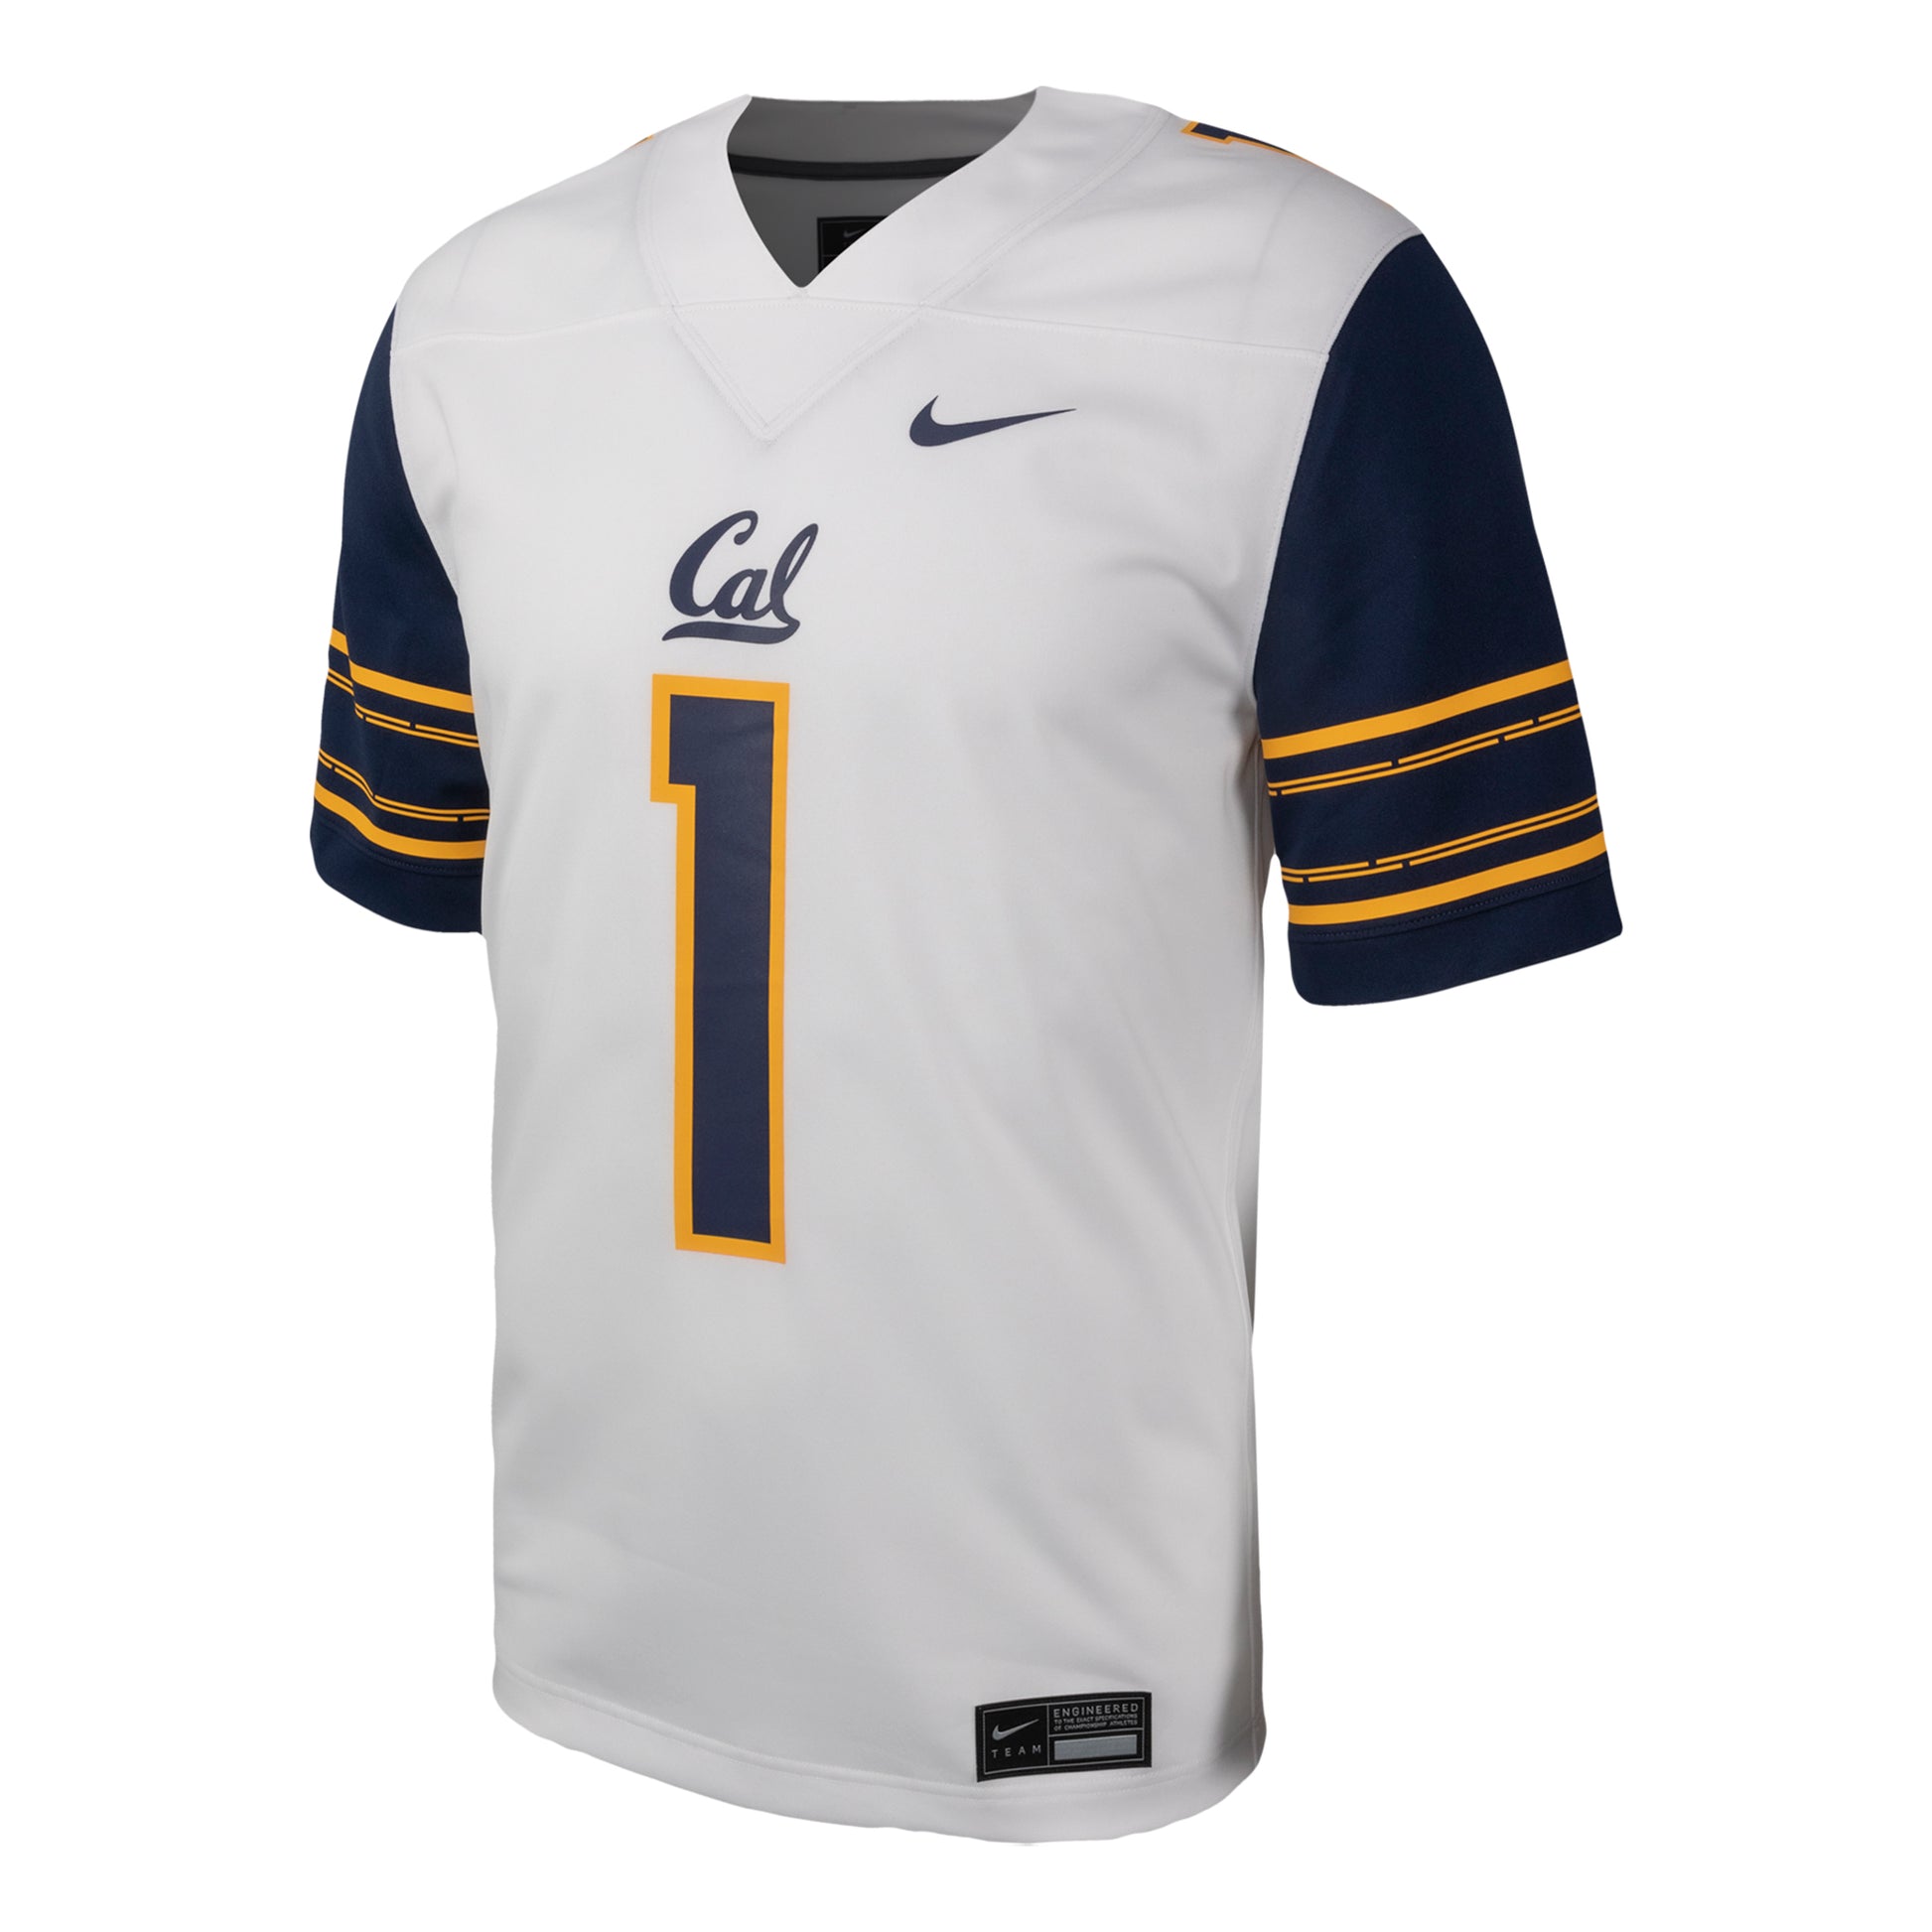 University of California Berkeley Cal Nike football jersey-White-Shop College Wear